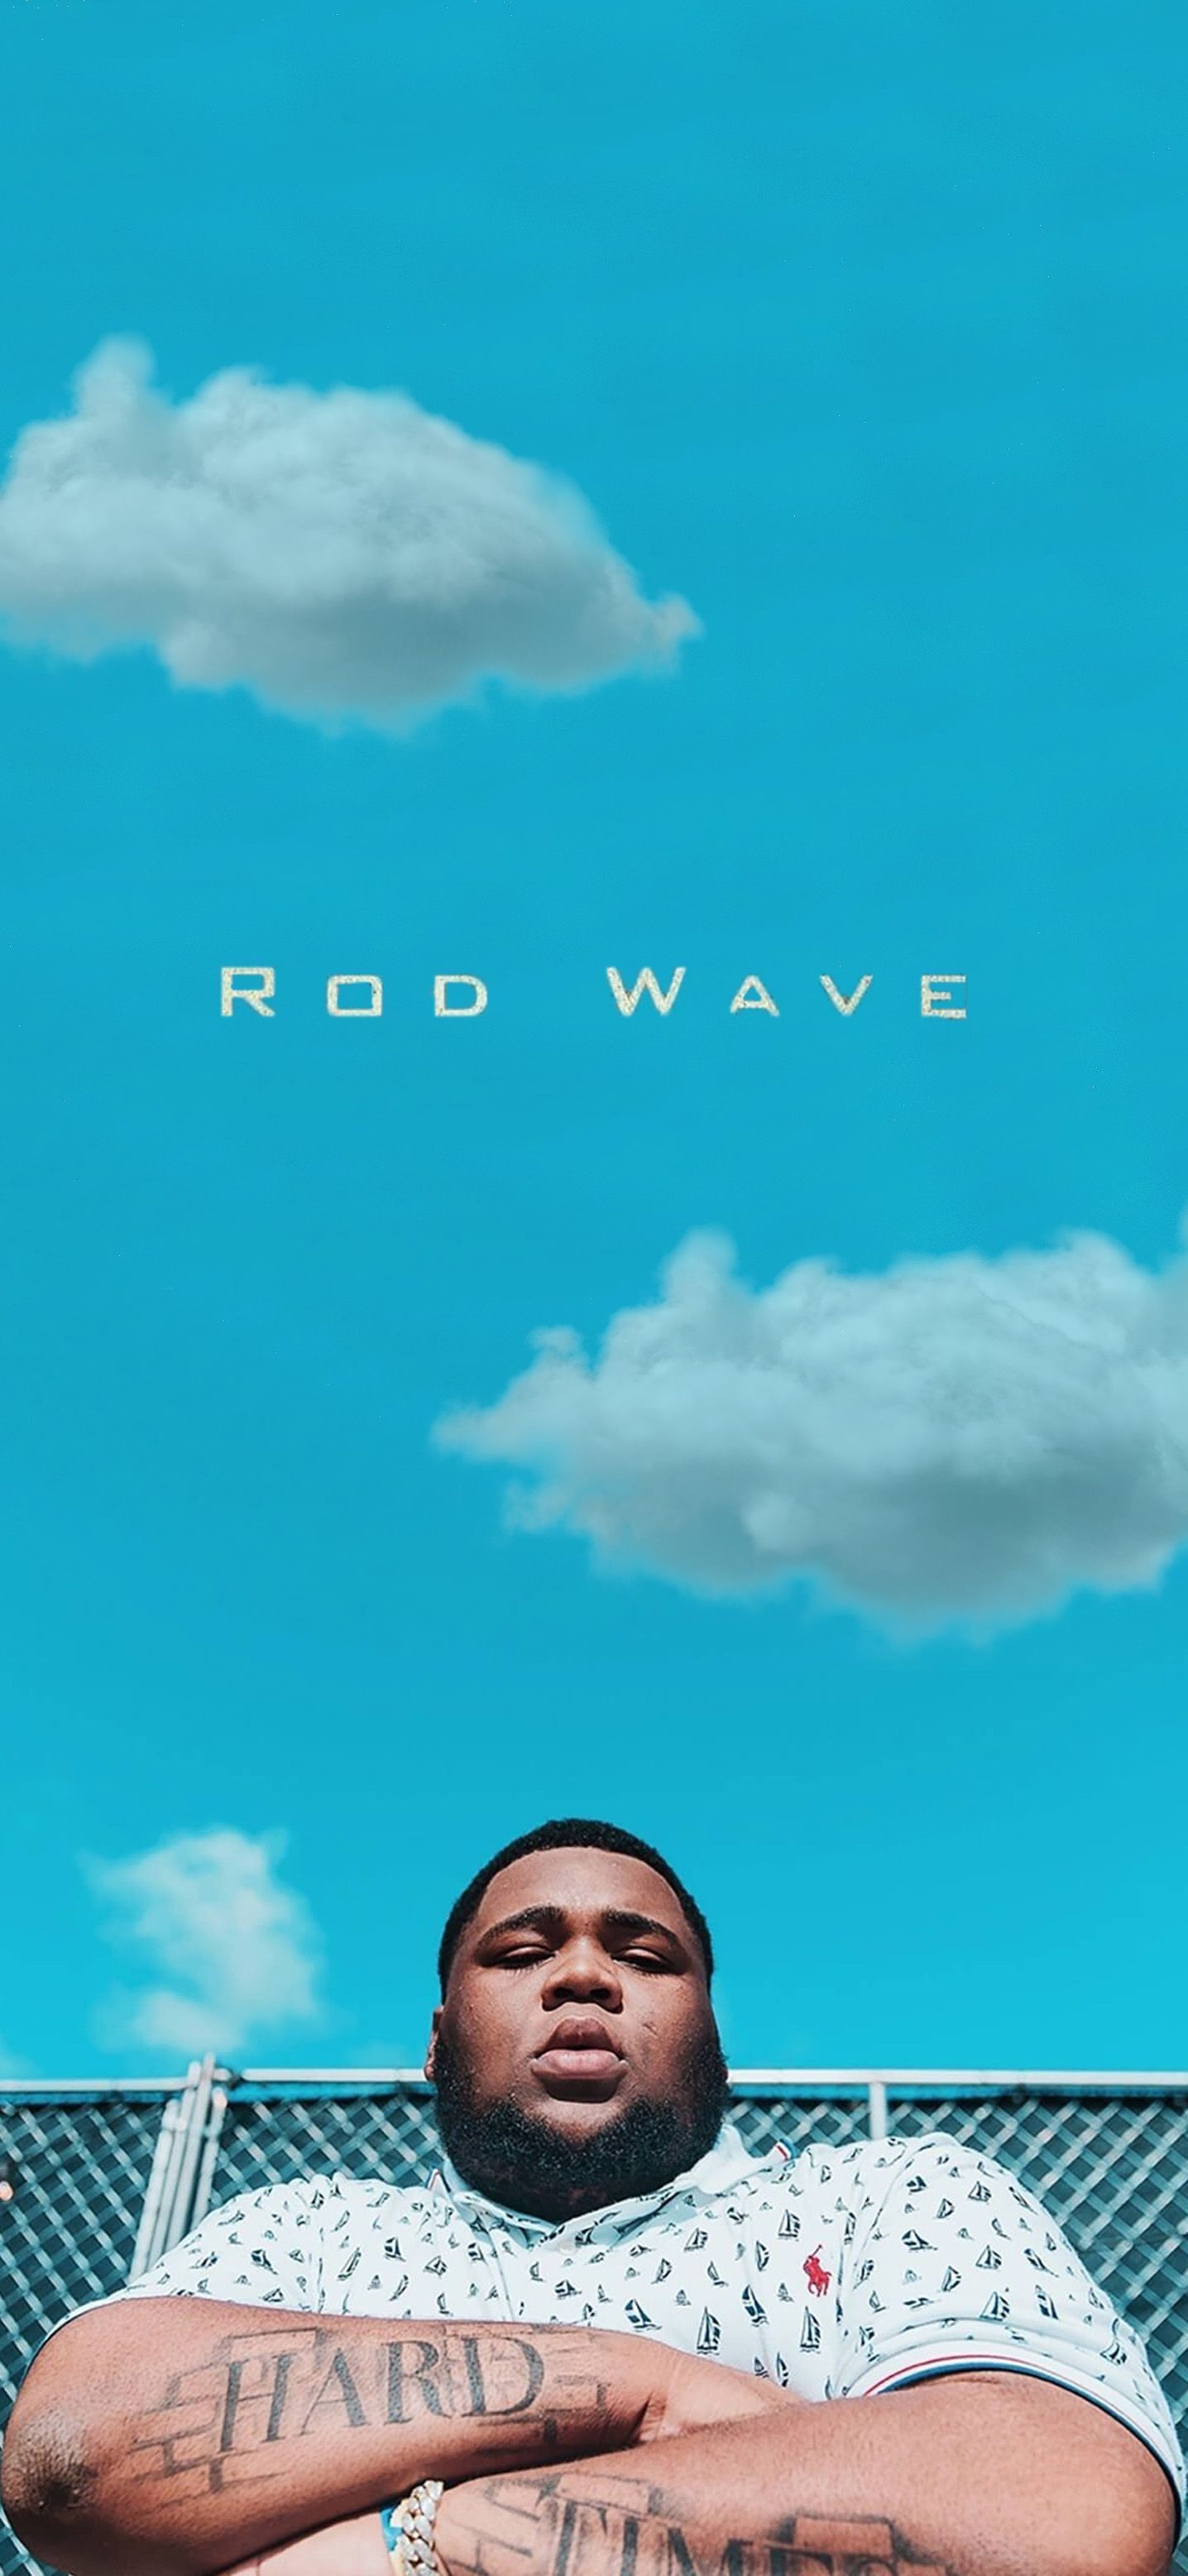 Rod Wave Wallpaper. Waves wallpaper, Waves wallpaper iphone, Wave poster